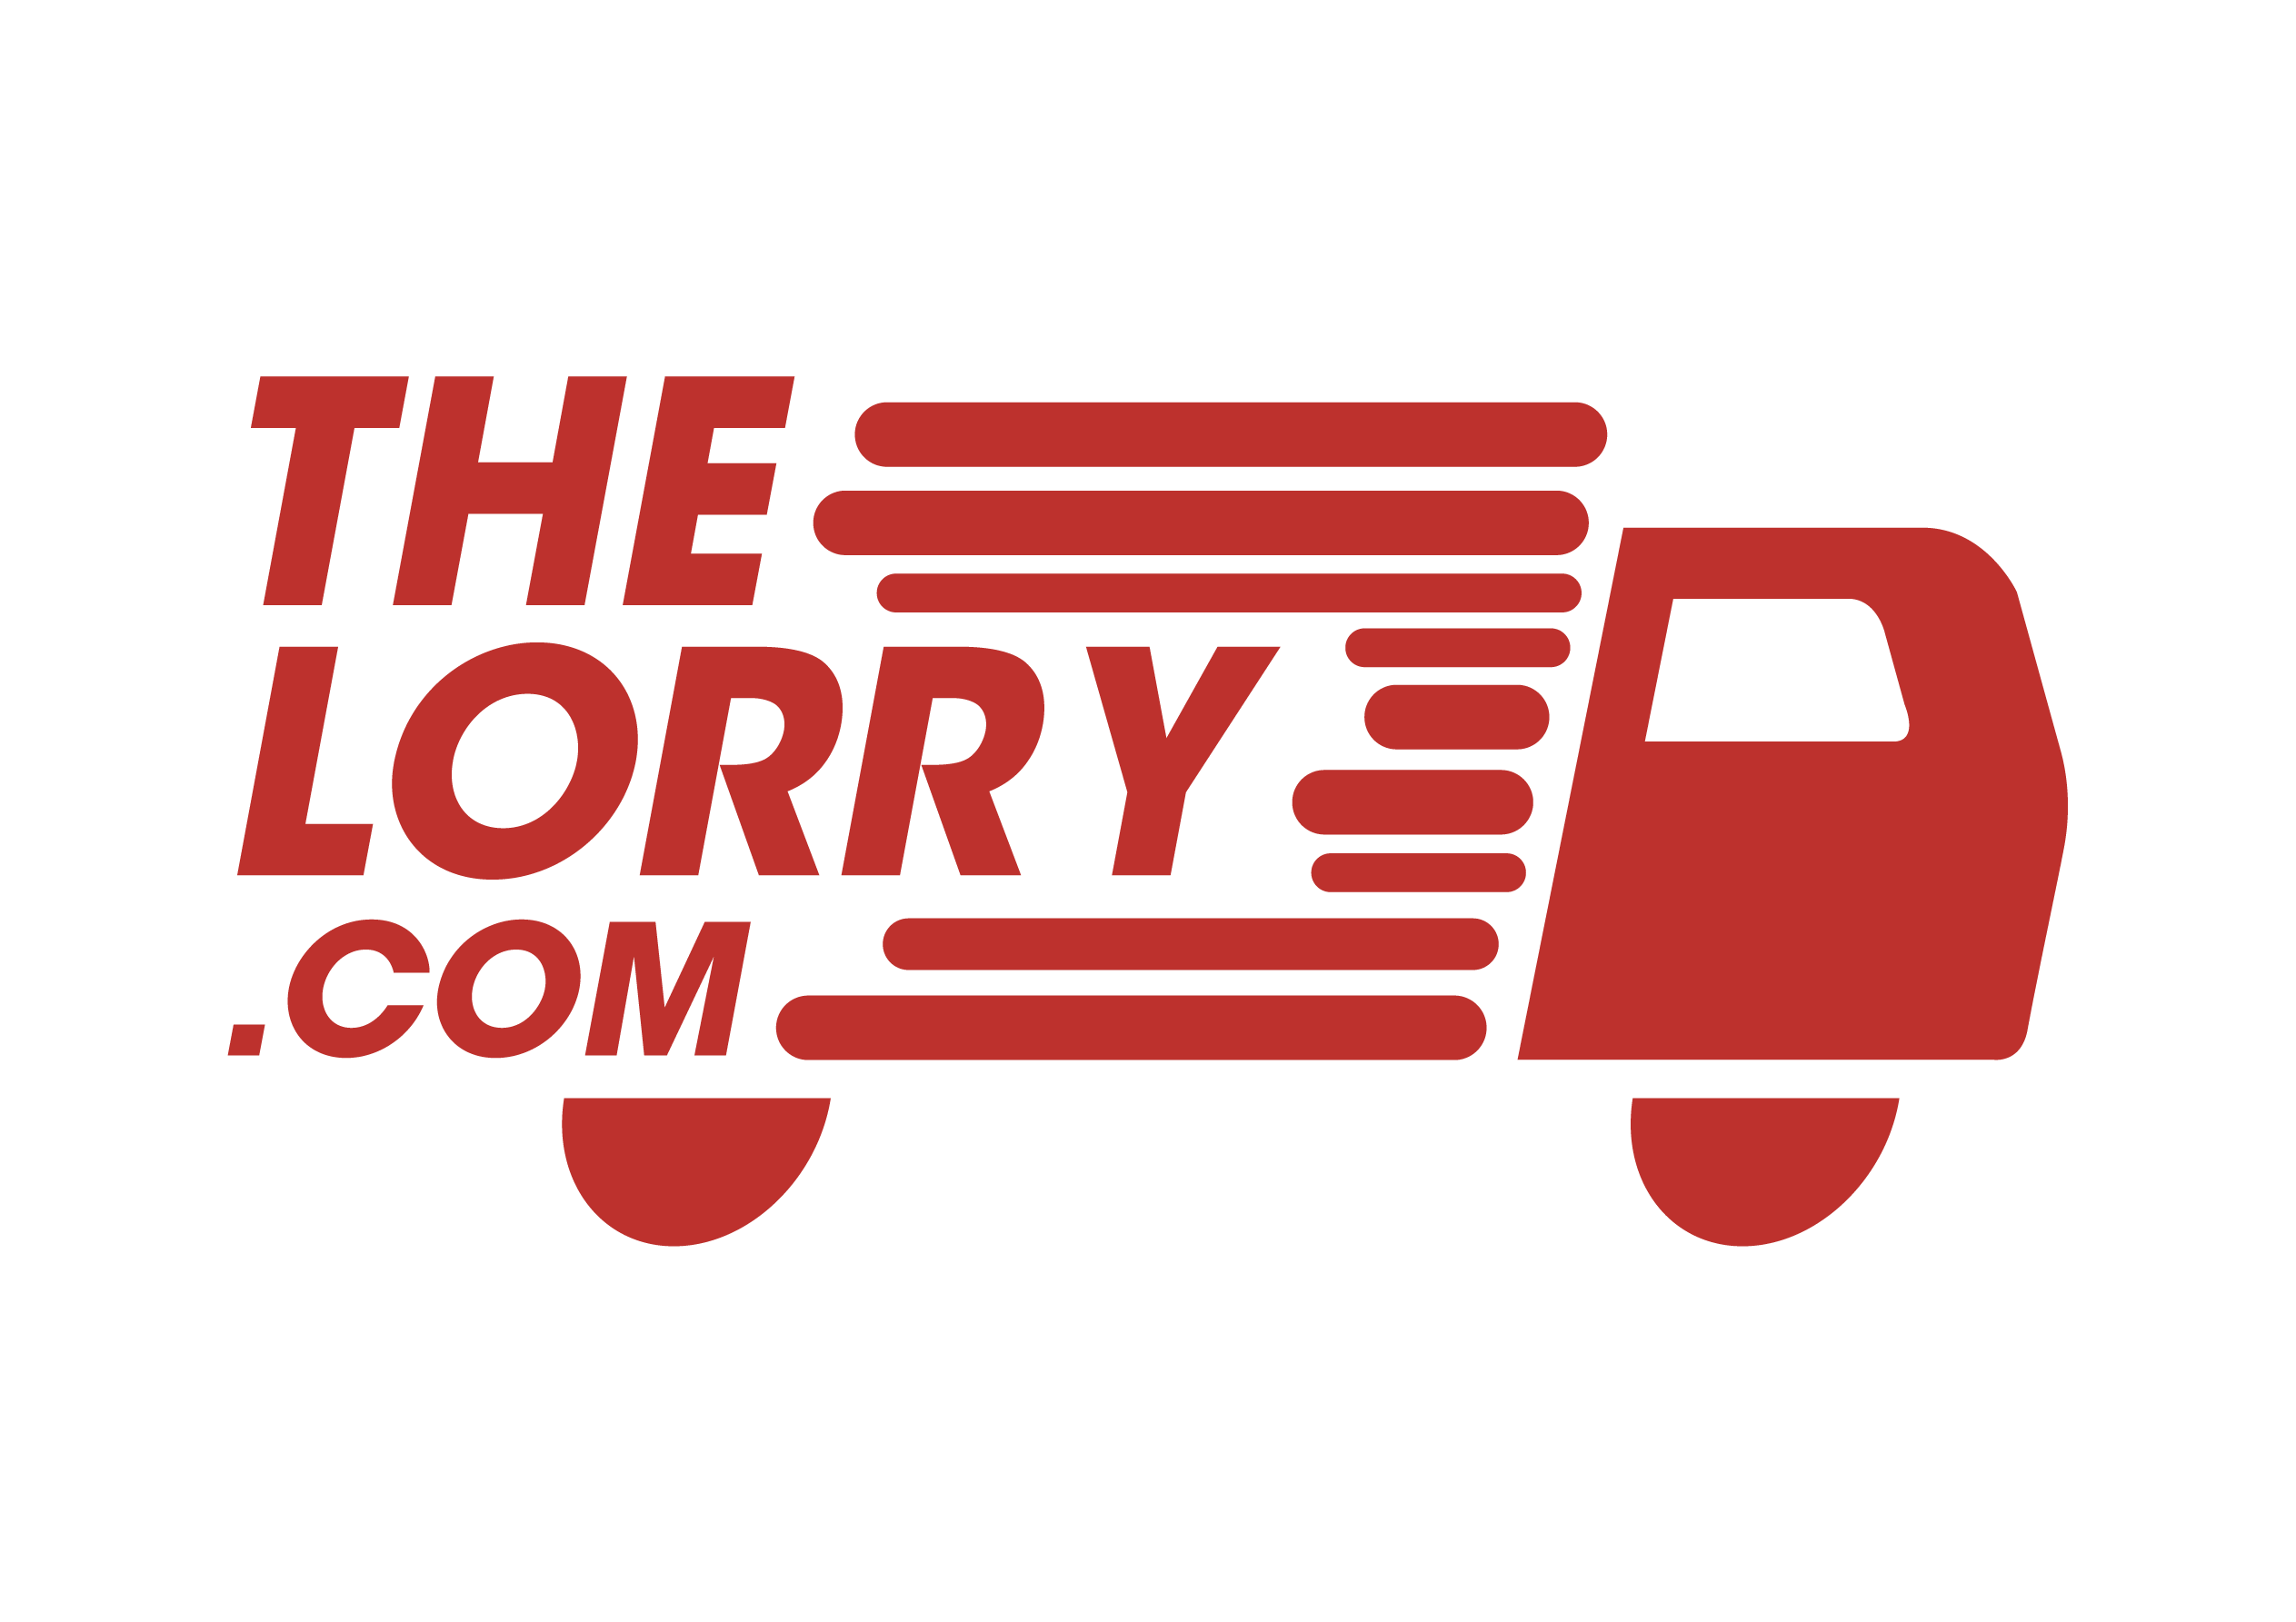 The Lorry logo